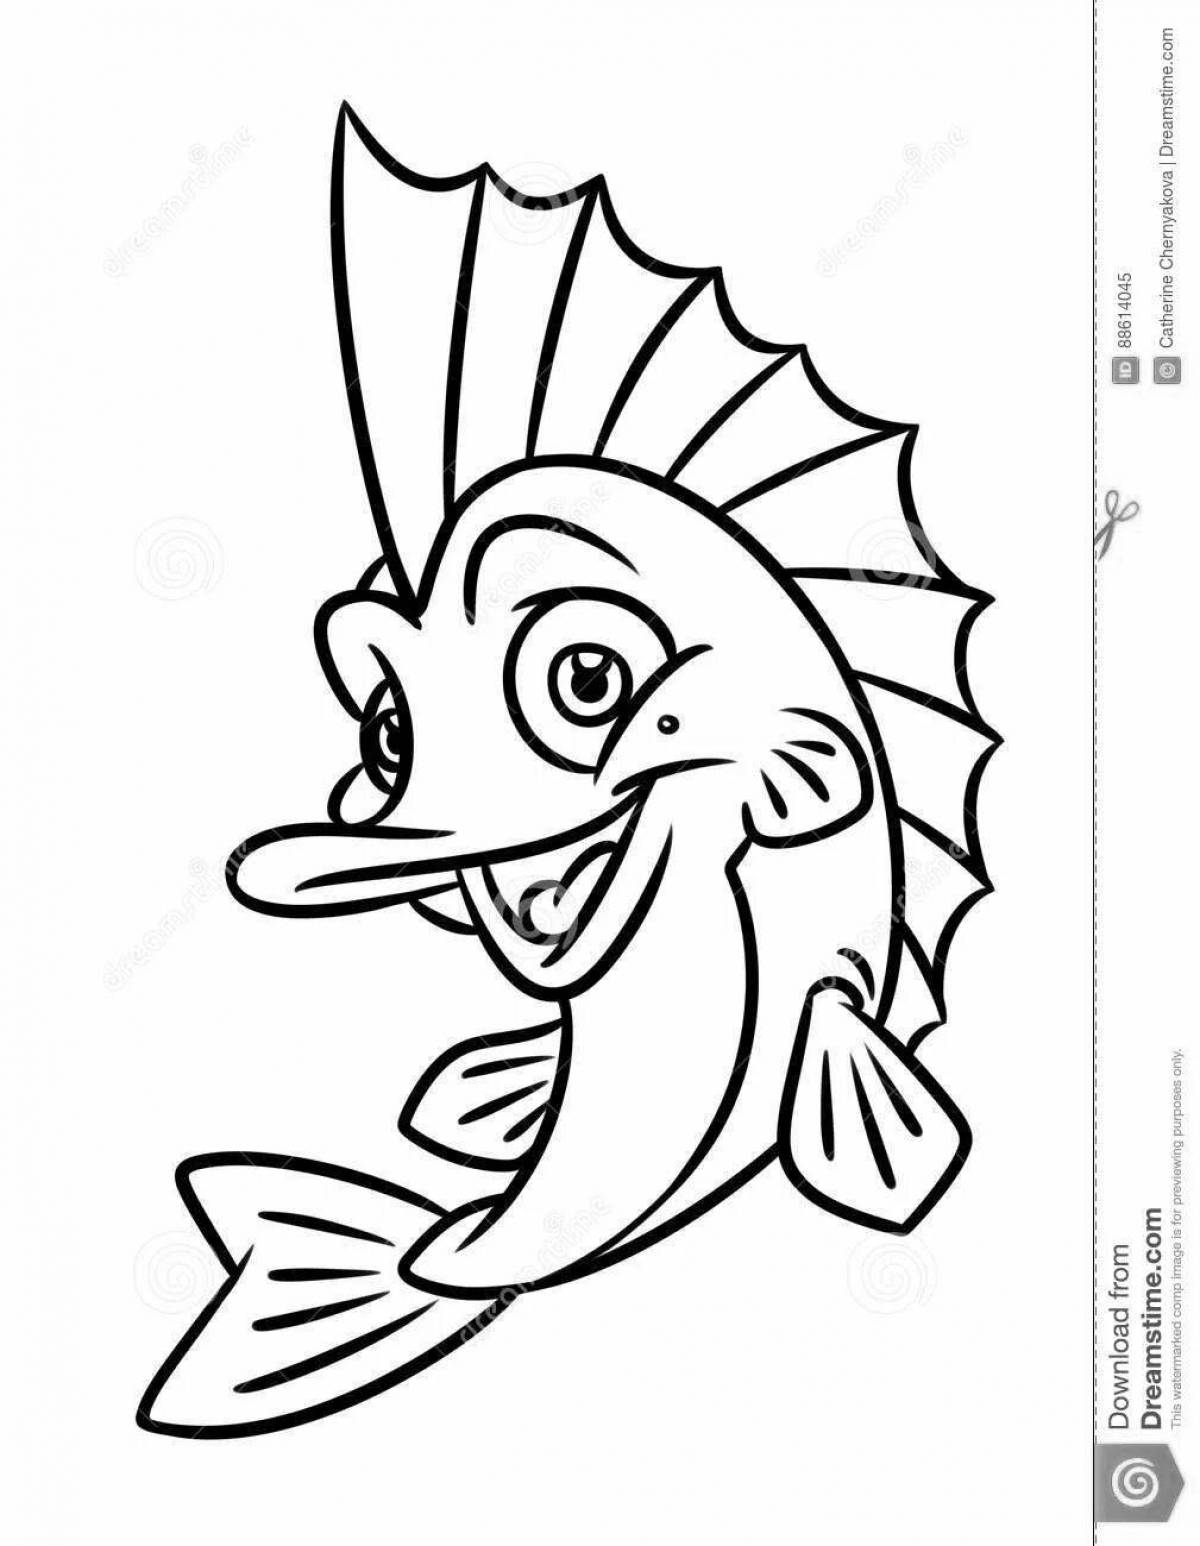 Coloring page festive ruff fish